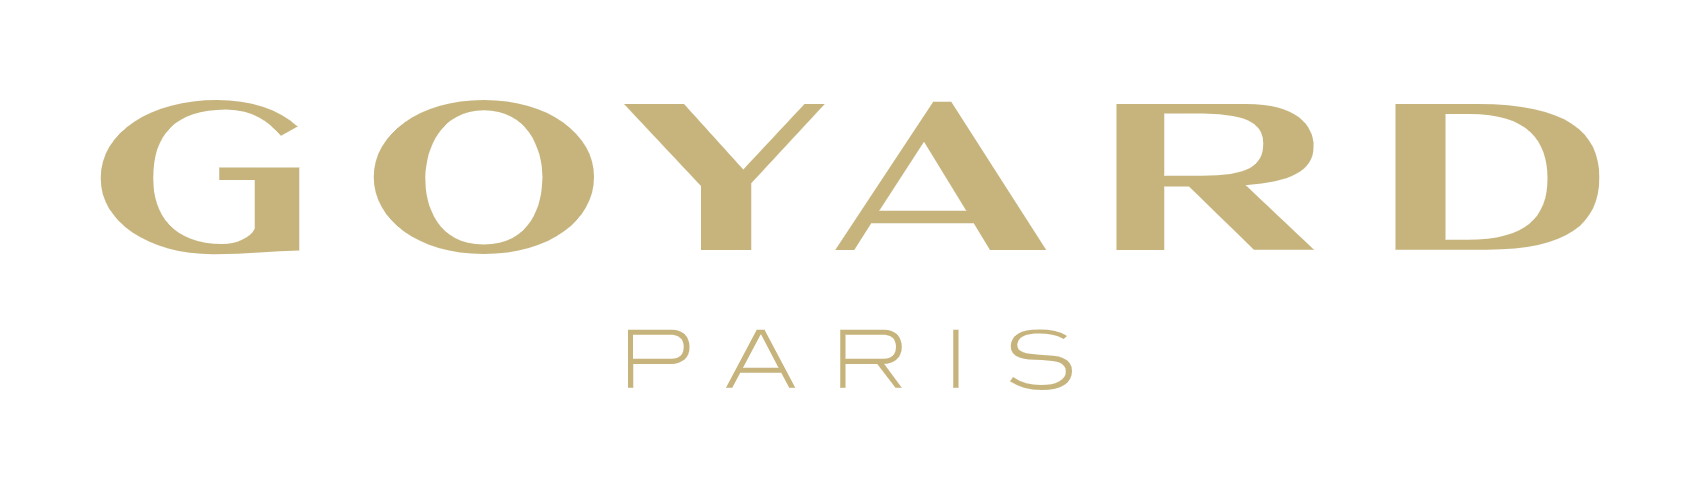 Goyard Paris